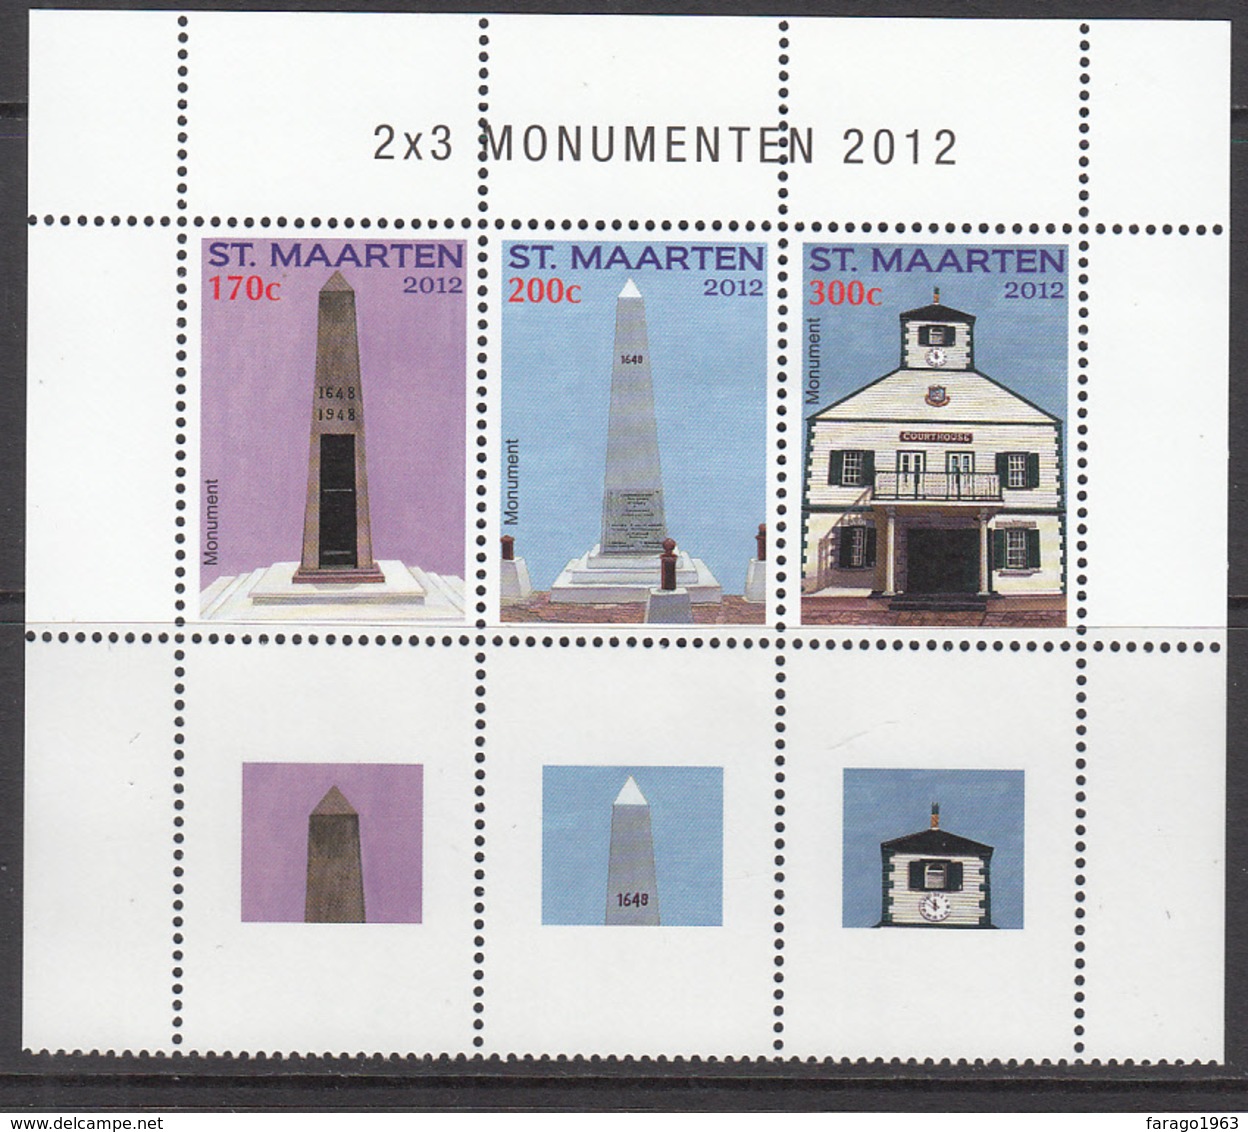 2012 St. Maarten Monuments Miniature Sheet Of 3 Stamps MNH  @ 80% Of FACE VALUE - Curacao, Netherlands Antilles, Aruba